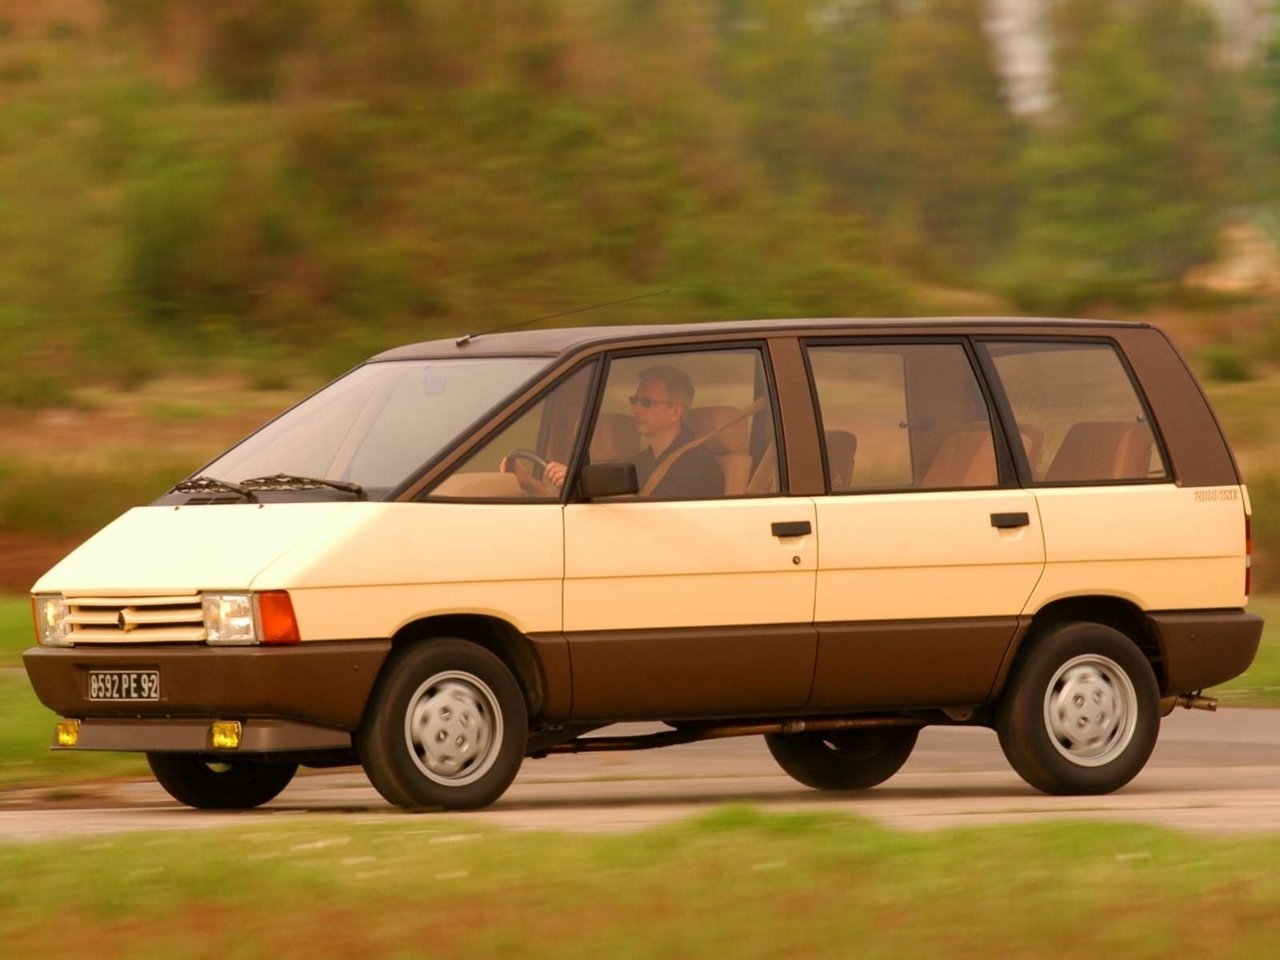 минивэн Renault Espace 1984 - 1992г выпуска модификация 2.0 MT (103 л.с.)